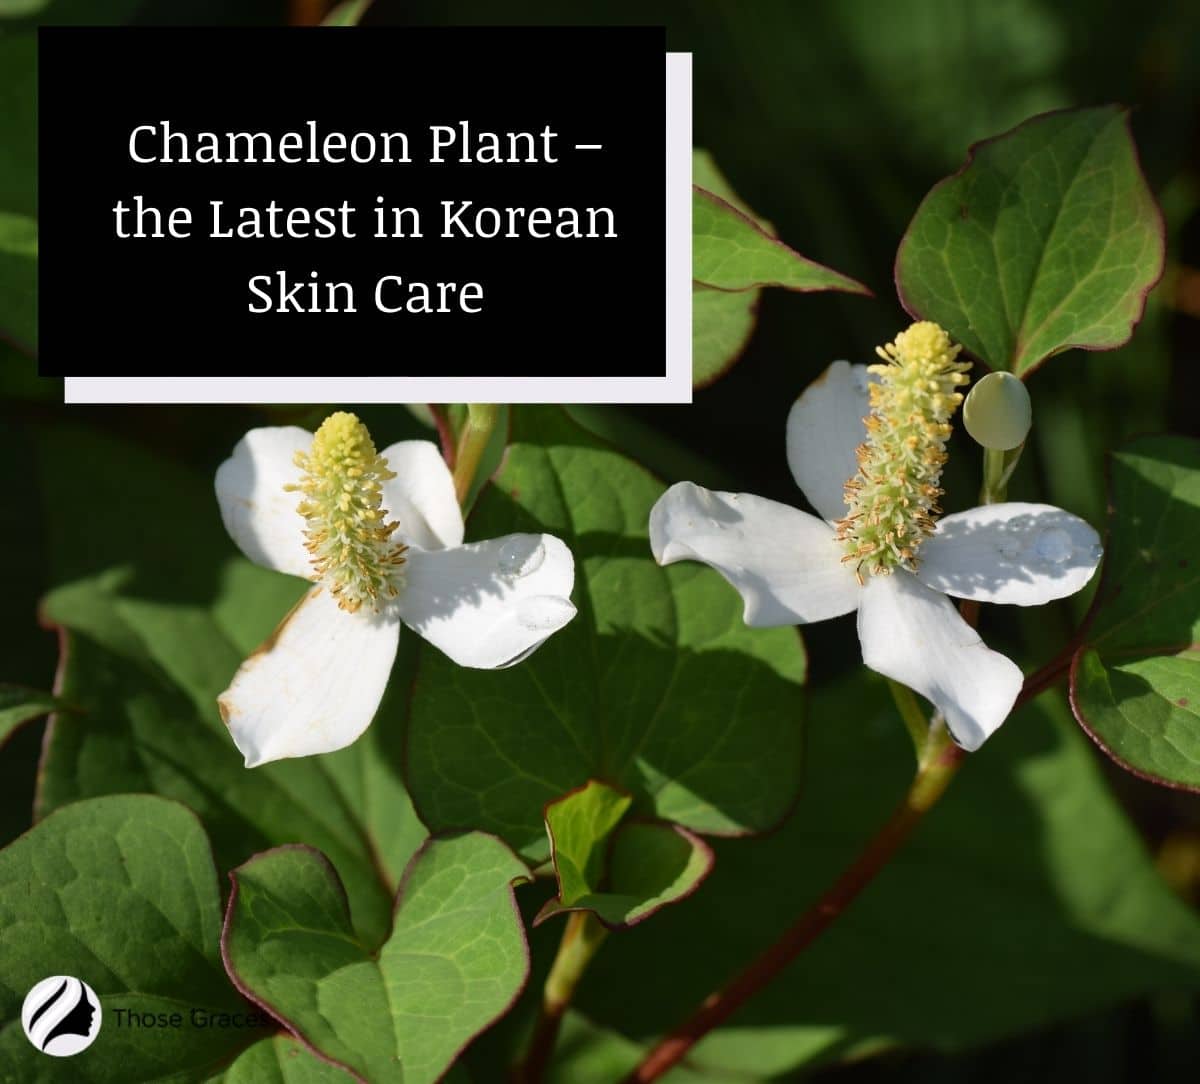 Chameleon Plant – the Latest in Korean Skin Care